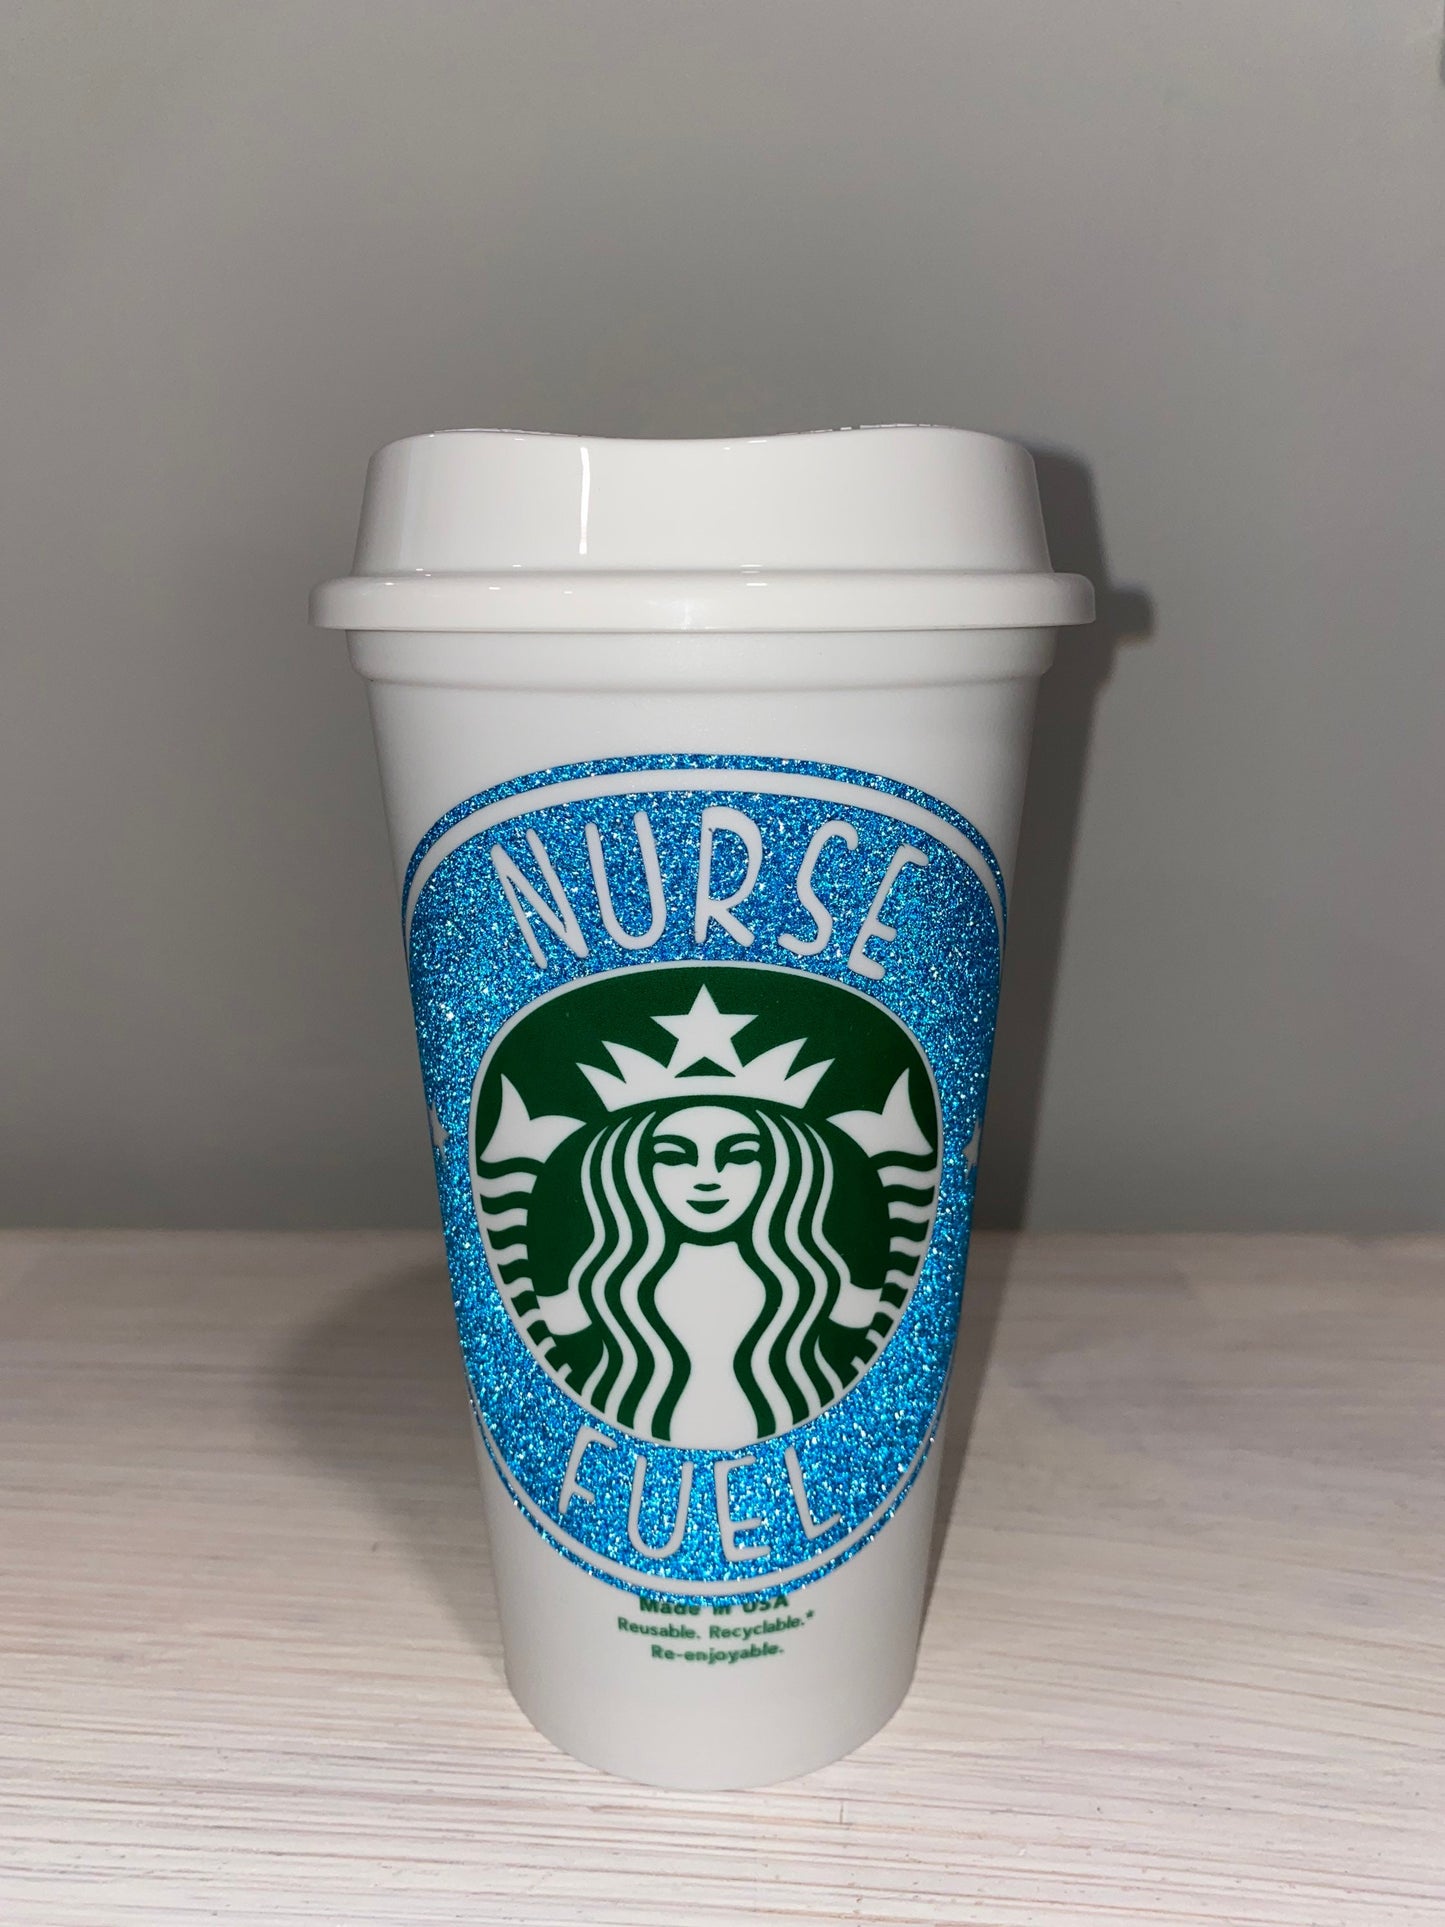 Nurse Fuel Starbucks Hot Coffee Cup, Nurse Cup, Starbucks Cup, Reusable Coffee Cup